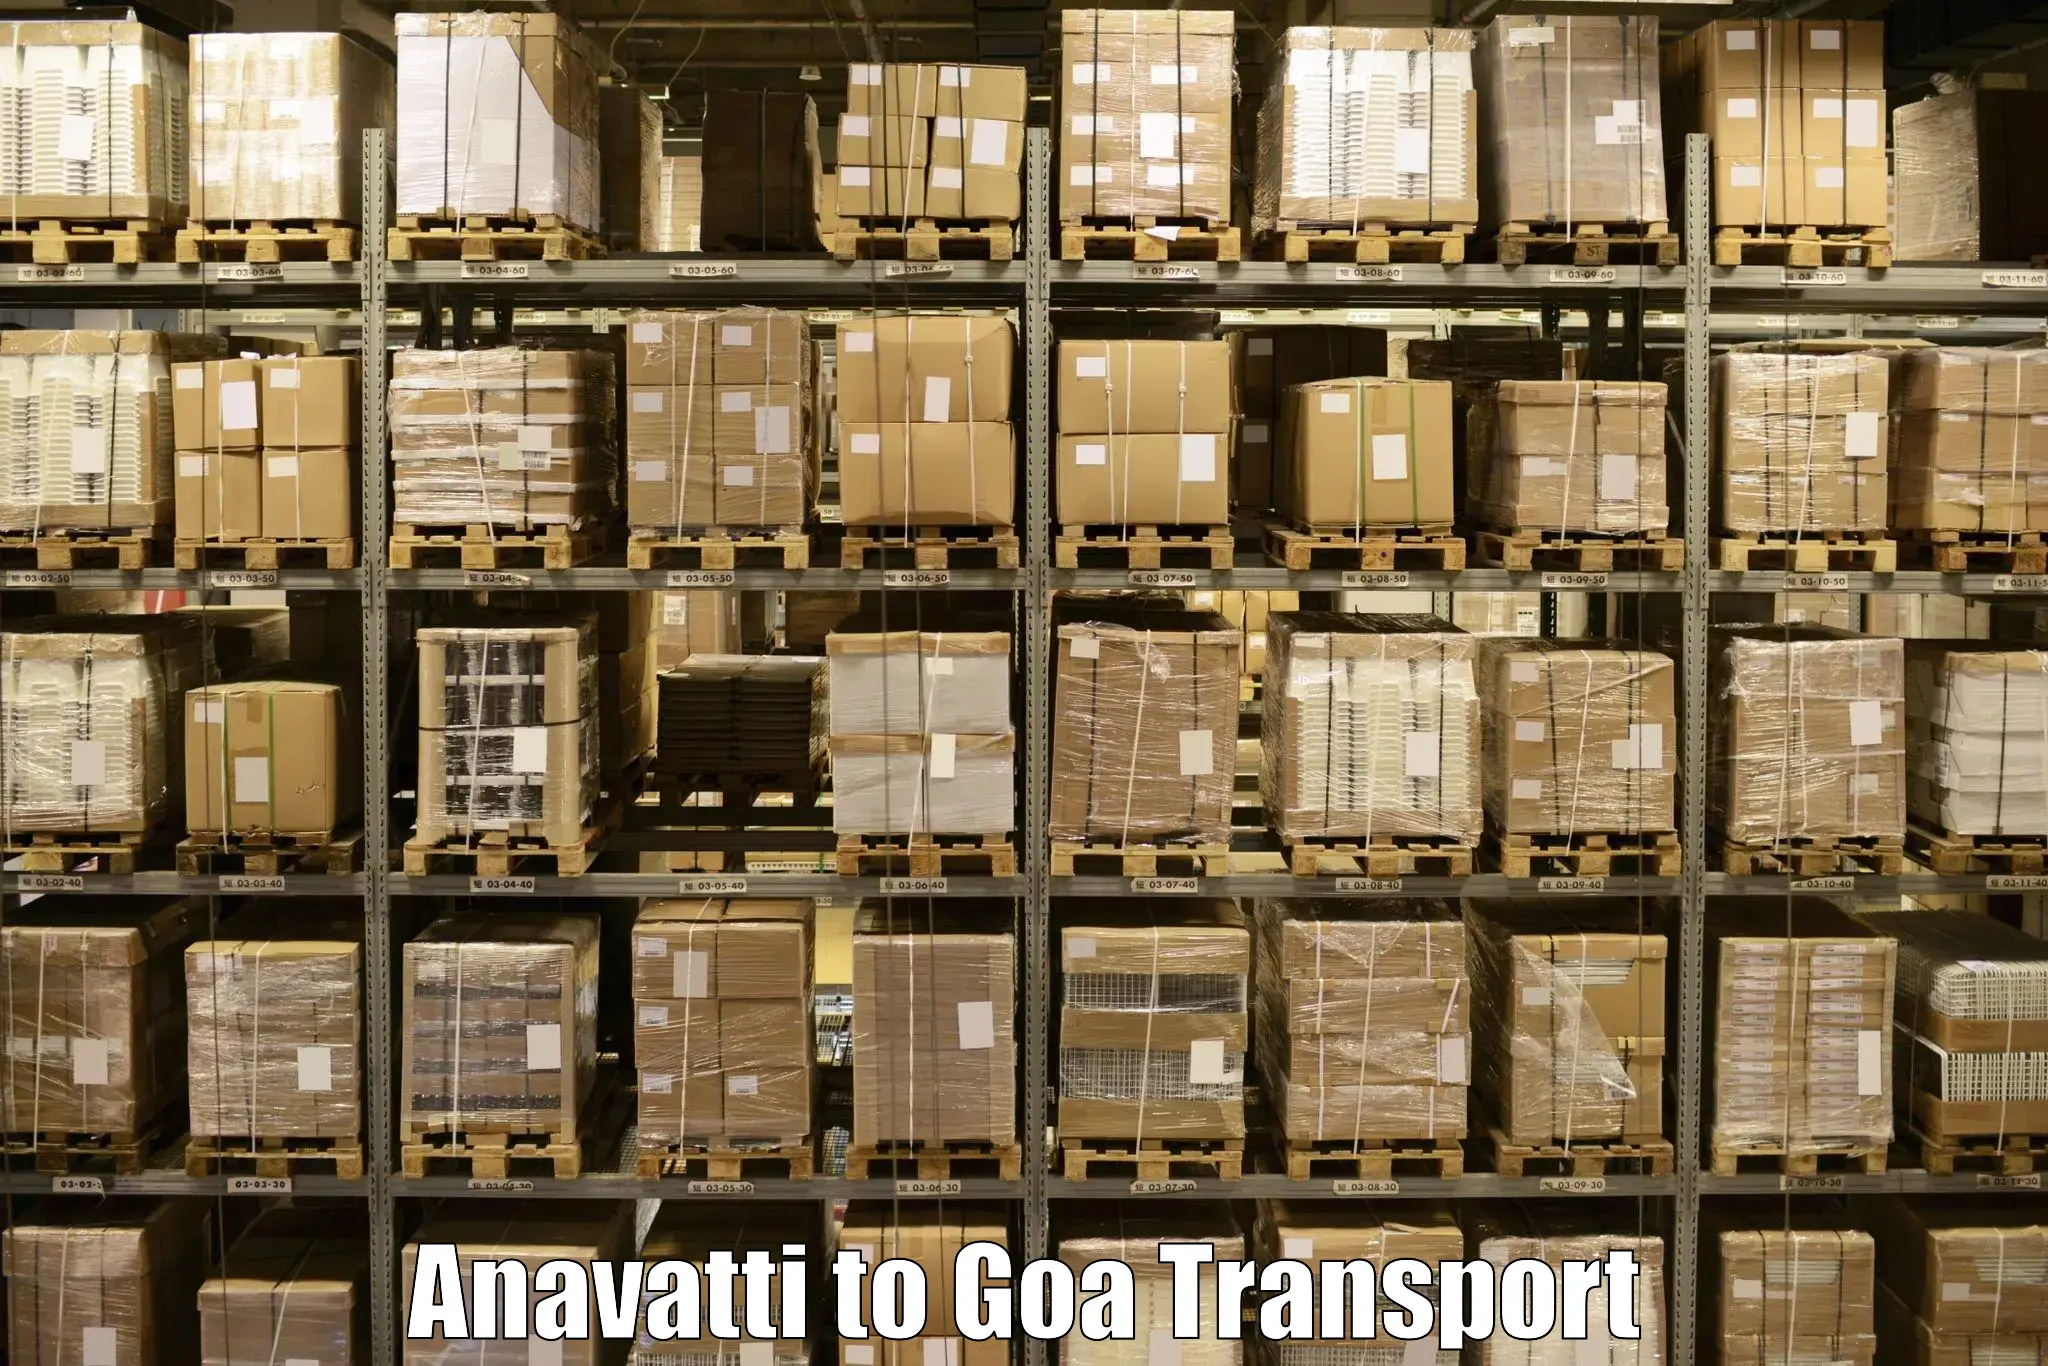 Delivery service Anavatti to Panaji